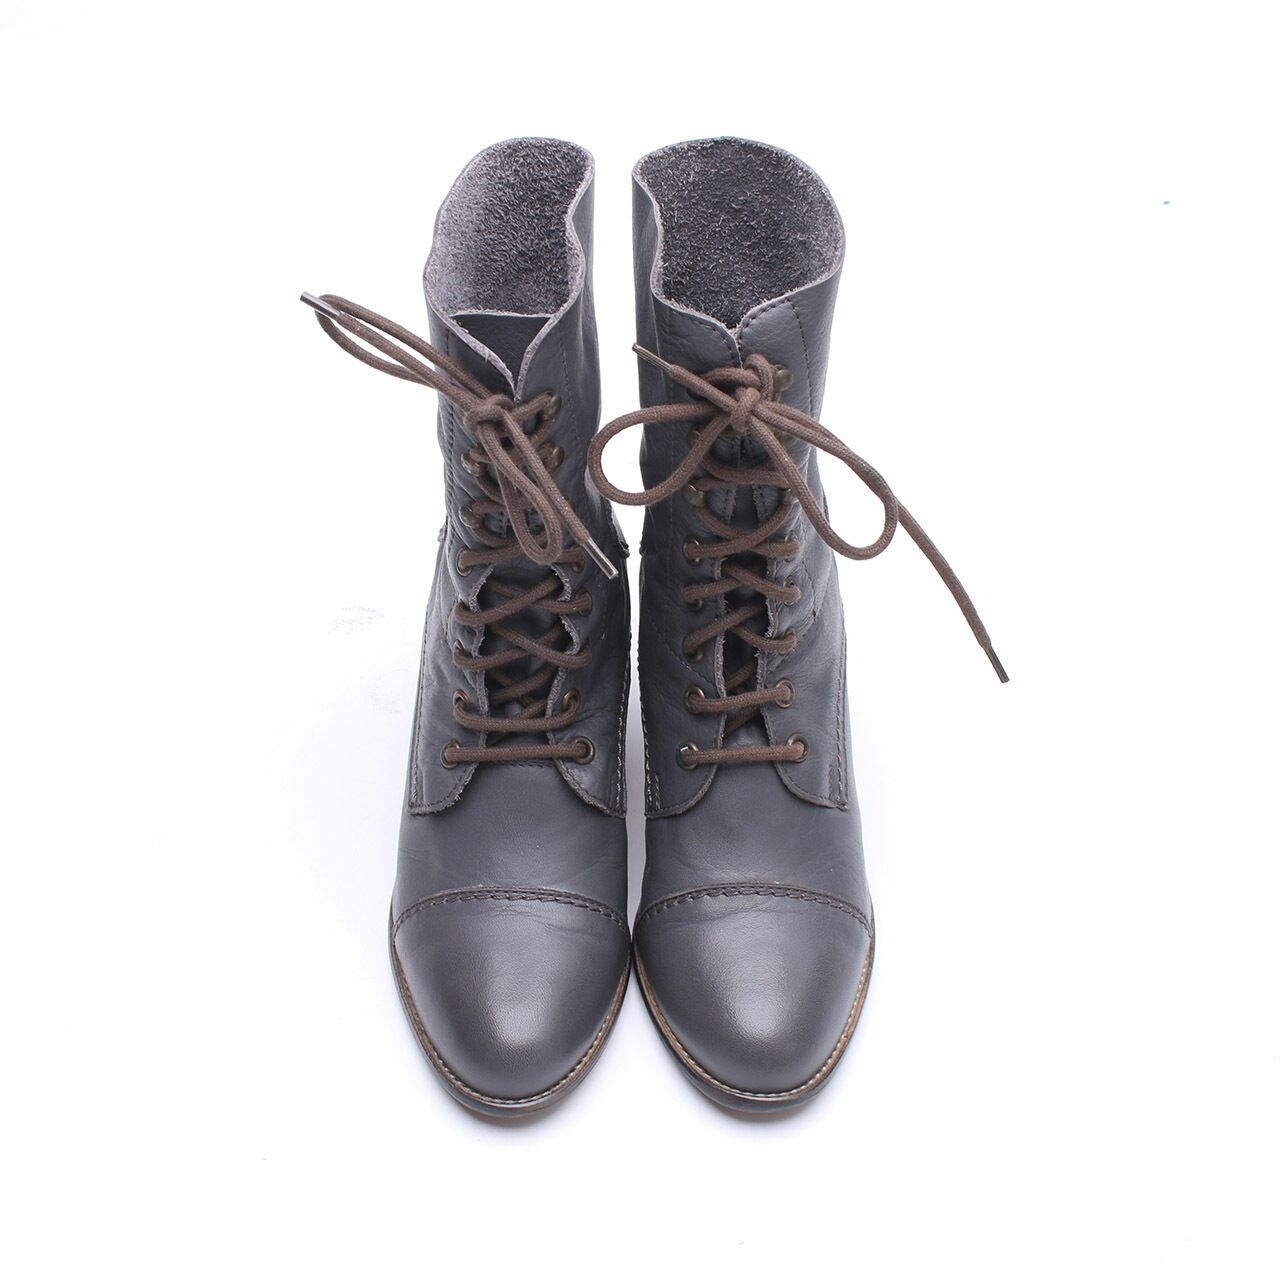 Promod Grey Boots